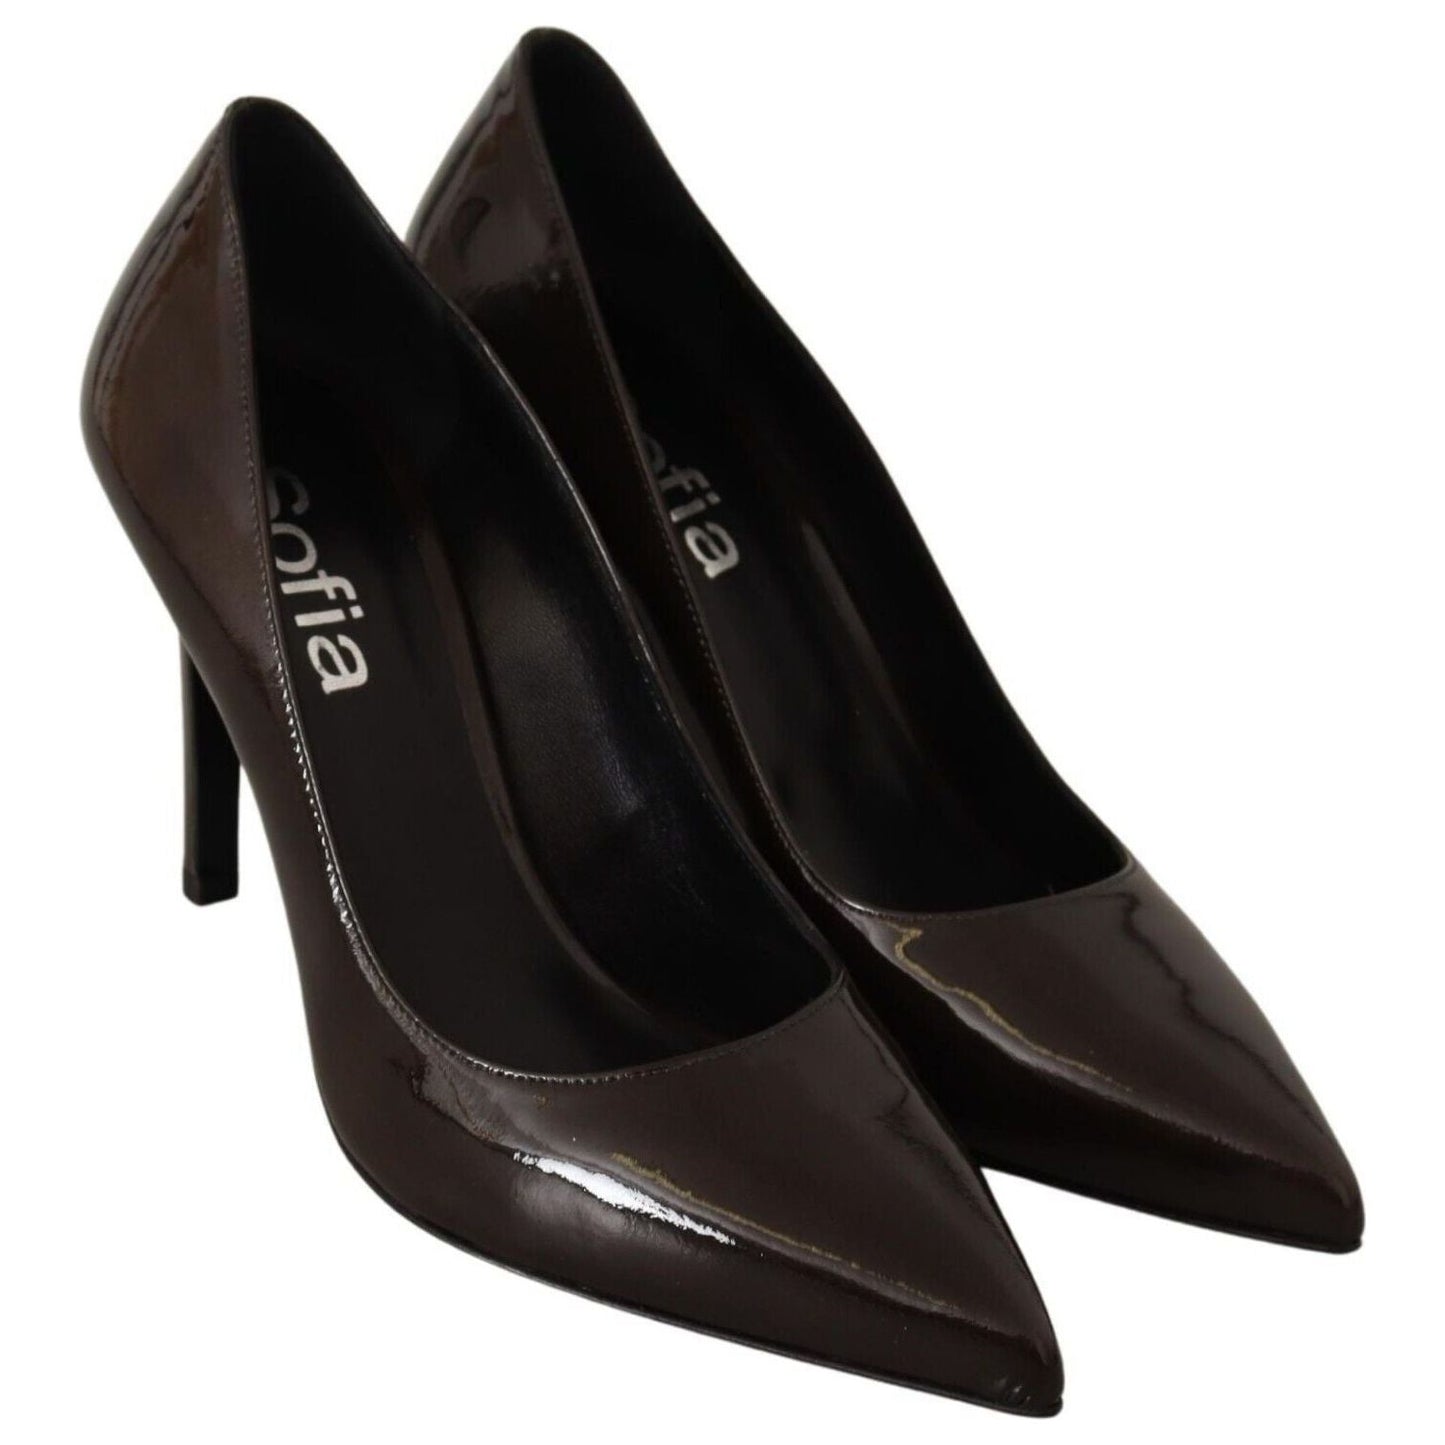 Sofia Elegant Brown Leather Heels Pumps WOMAN PUMPS brown-patent-leather-stiletto-heels-pumps-shoes s-l1600-2022-10-27T121738.624-4a5632e4-c5d.jpg